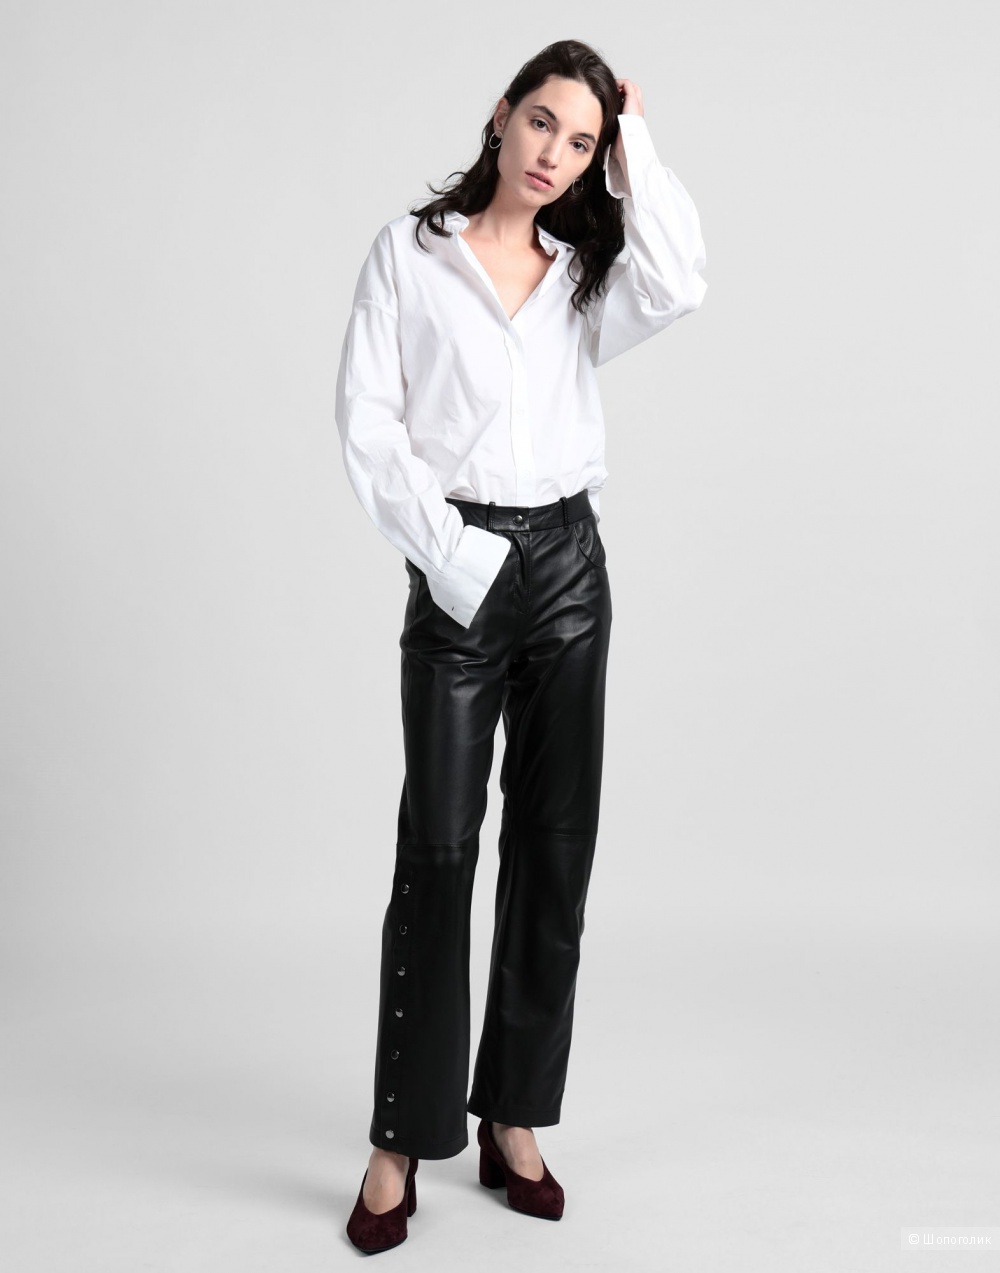 Кожаные женские брюки "8 by YOOX". Размер М.